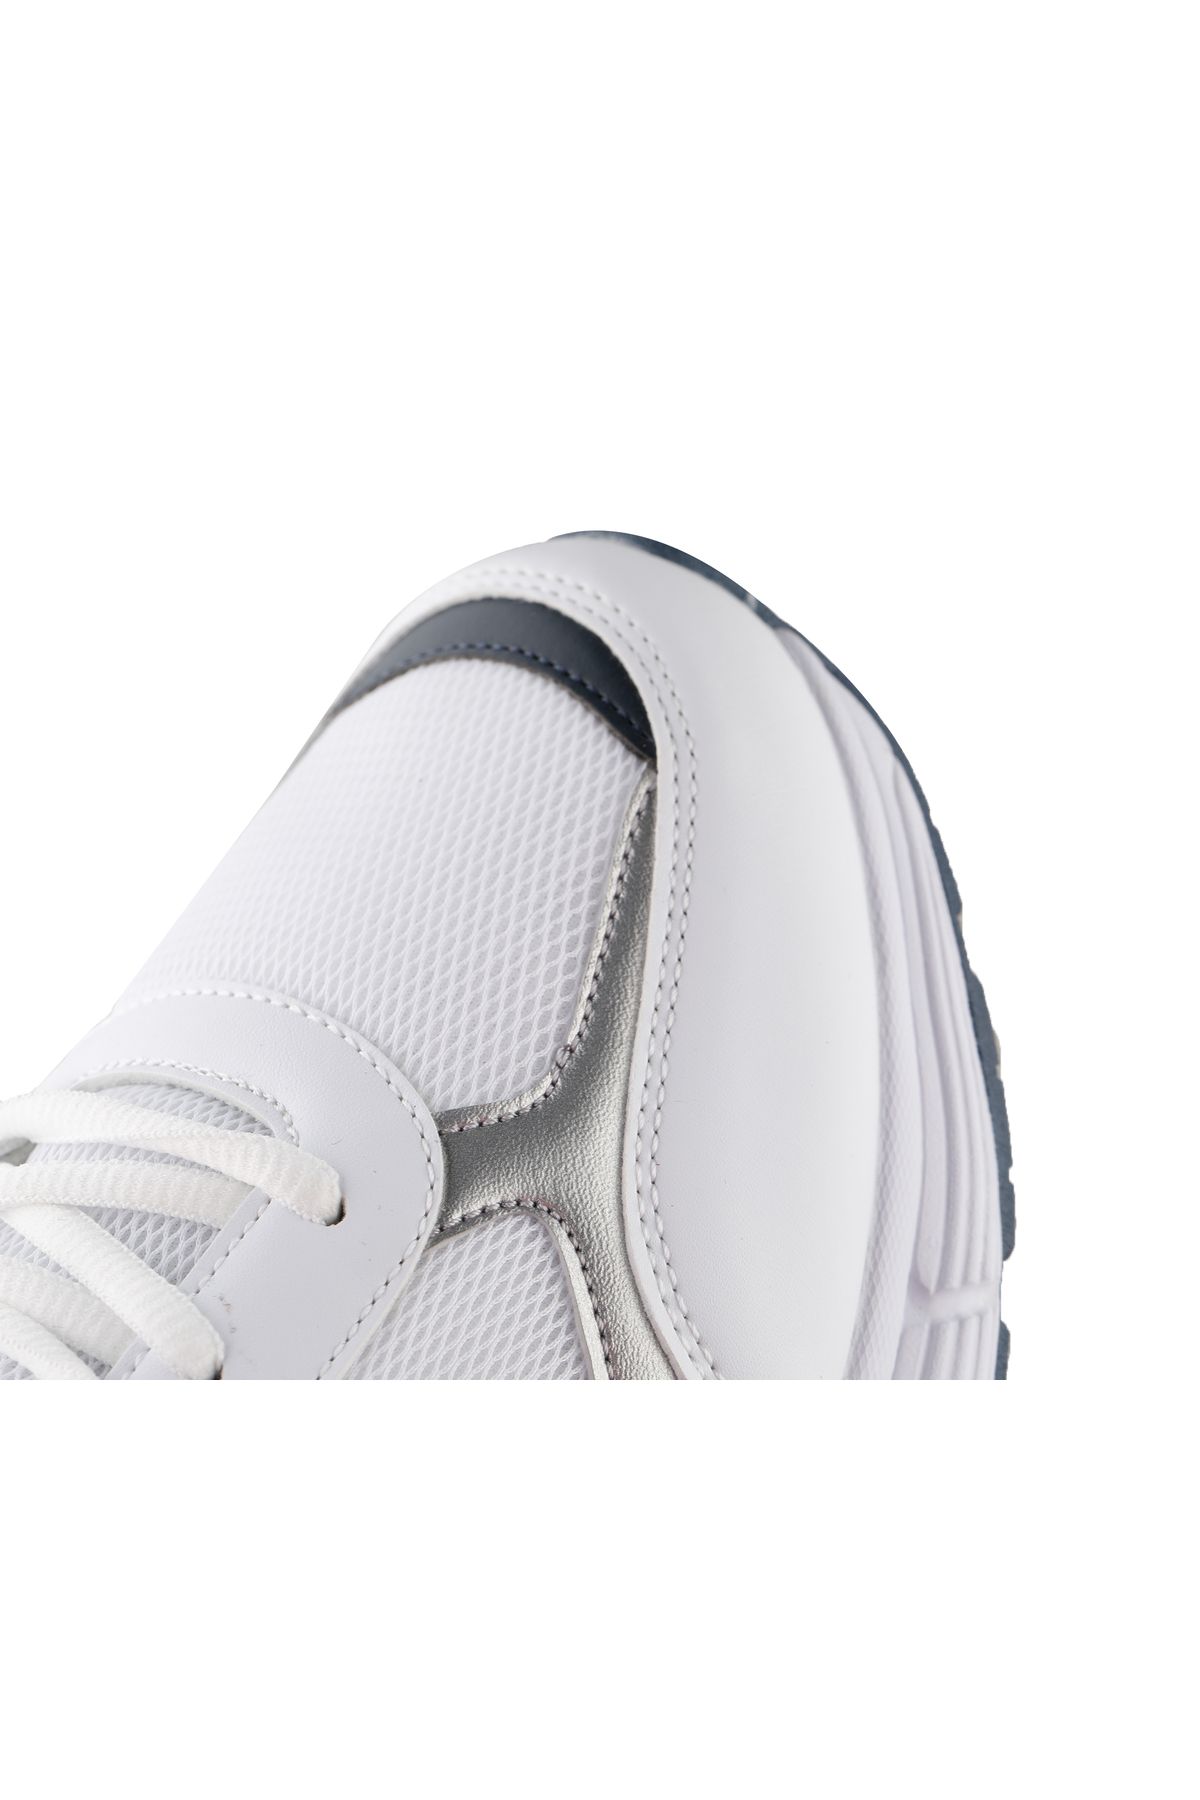 hummel کفش روزانه مردان HML Vera 900527-0587 سفید